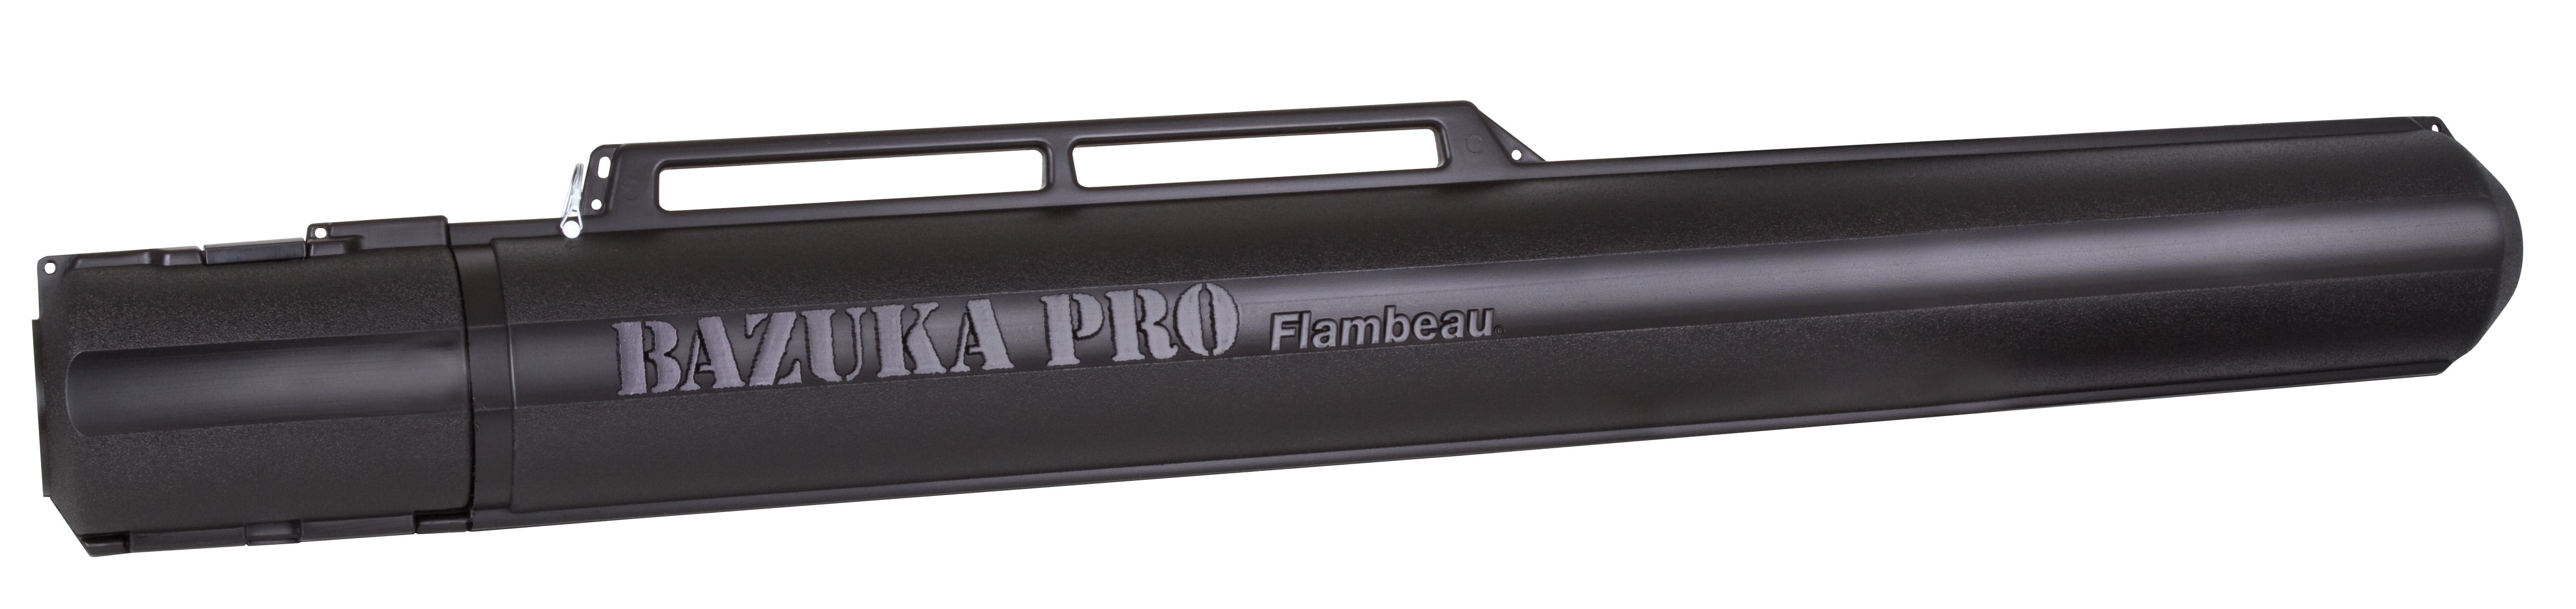 Buy Flambeau Bazuka Pro Telescopic Rod Tube online at